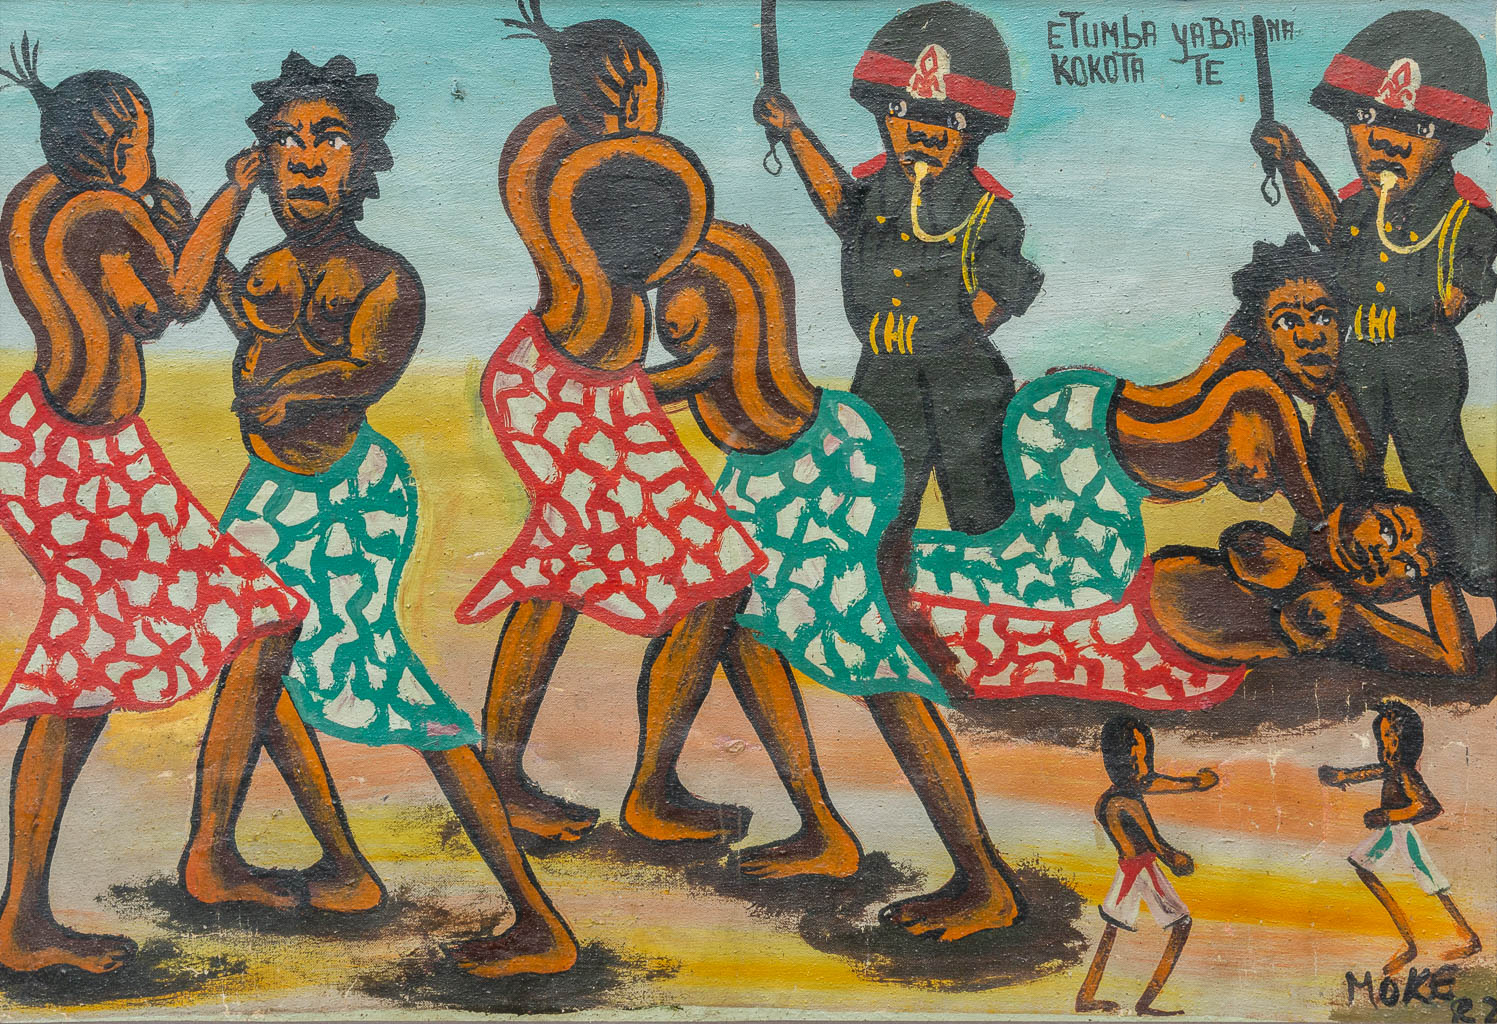 MOKE (1950-2001) 'The fight' oil on canvas. 1986 (60 x 42 cm)